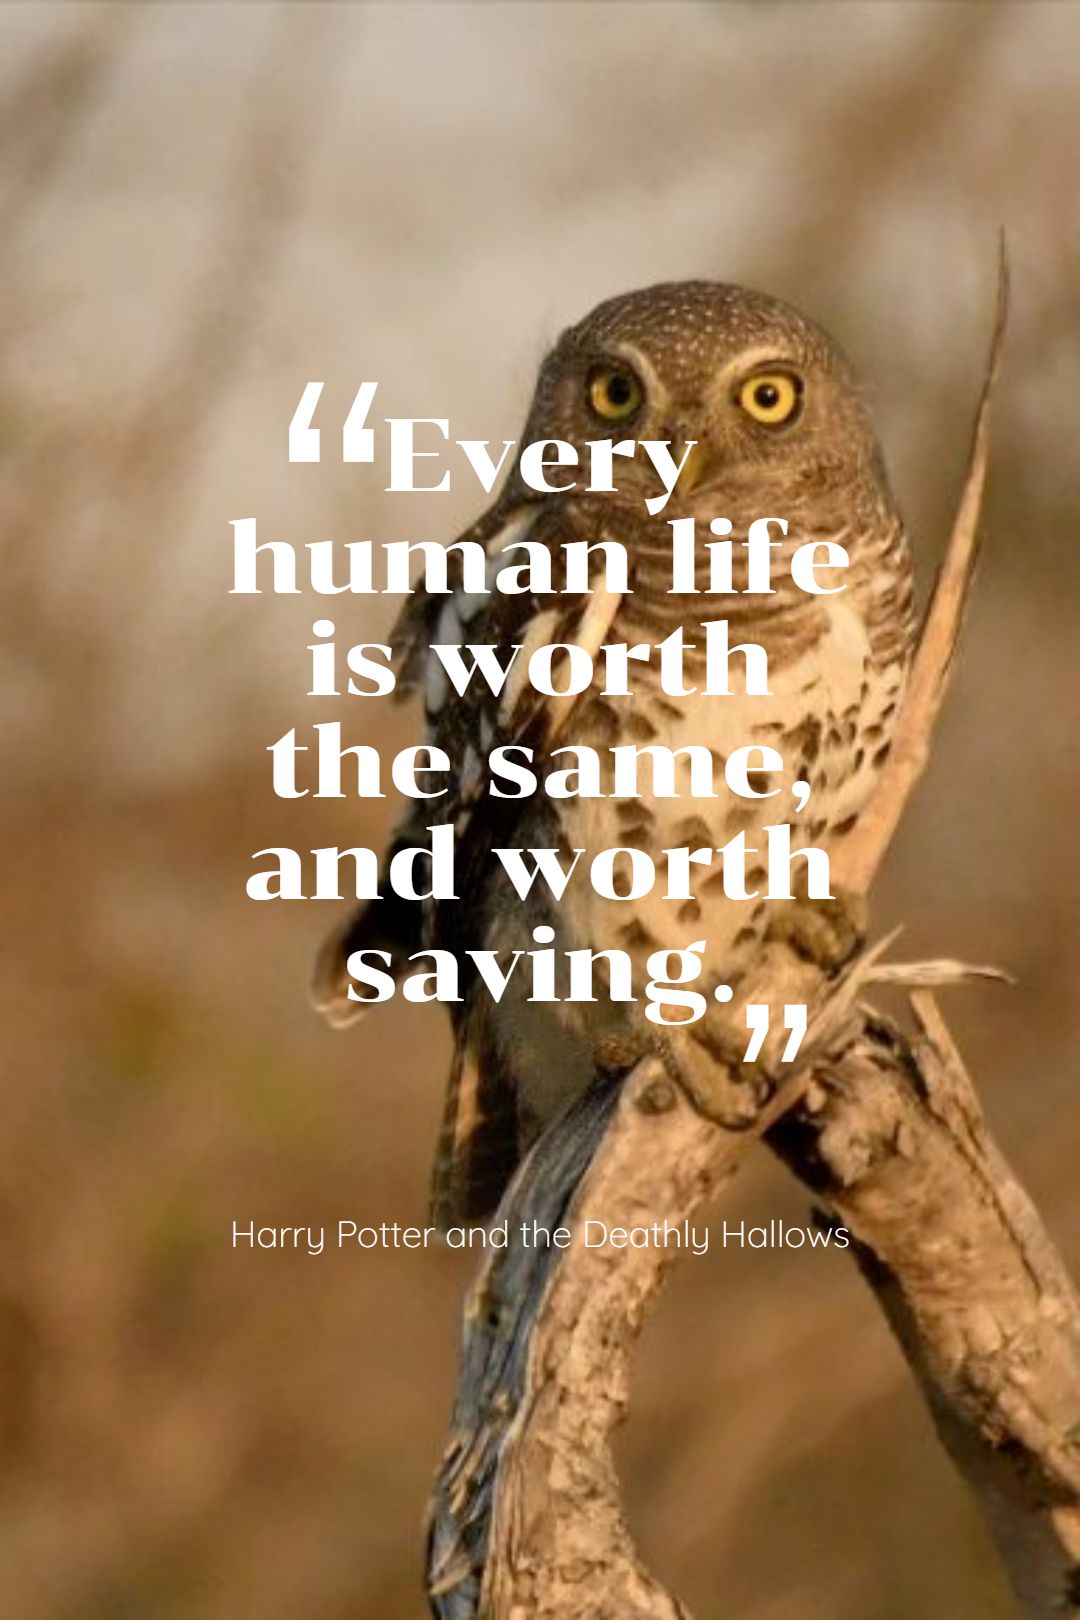 Every human life is worth the same and worth saving.